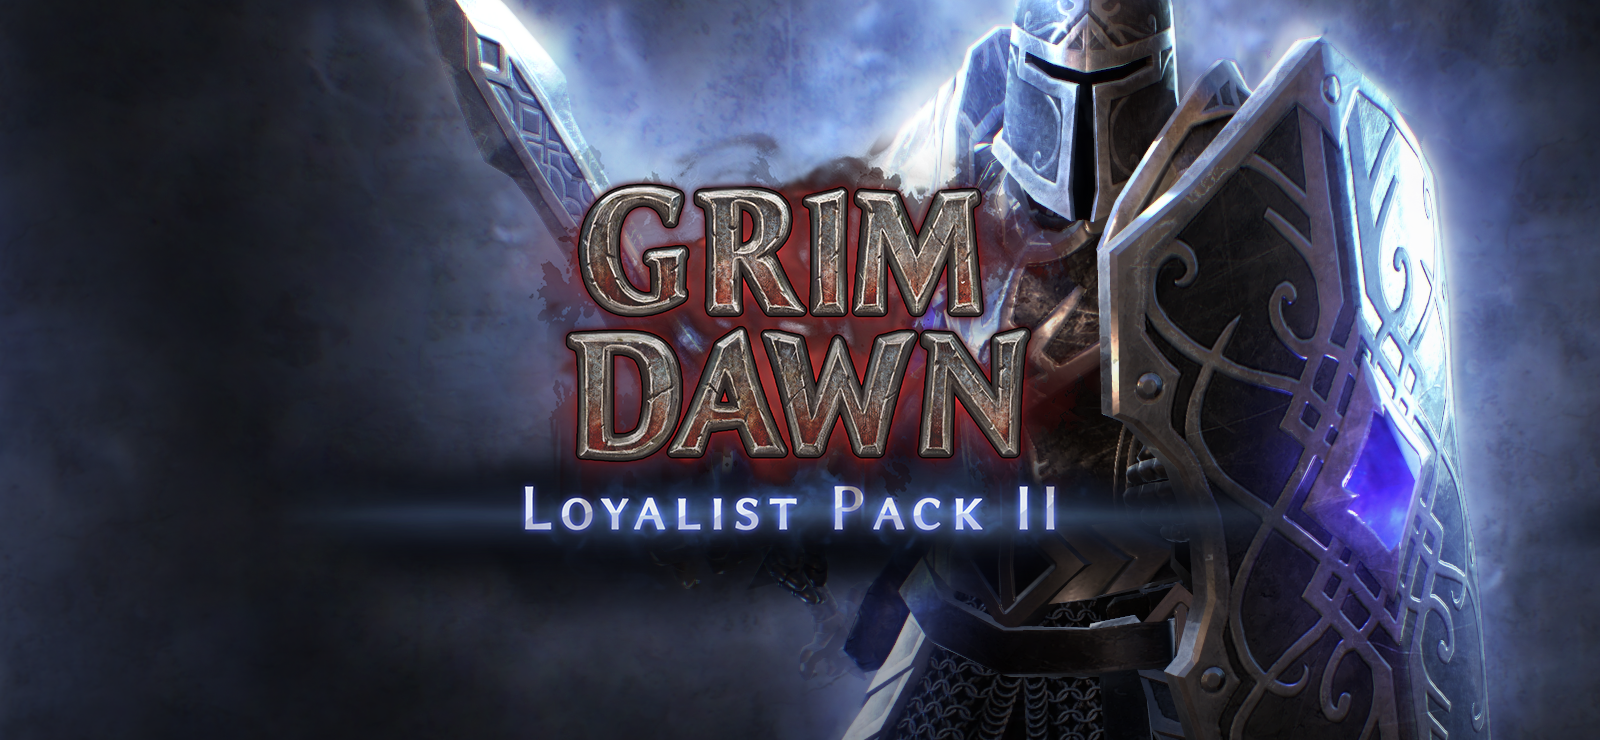 Grim Dawn - Loyalist Item Pack #2